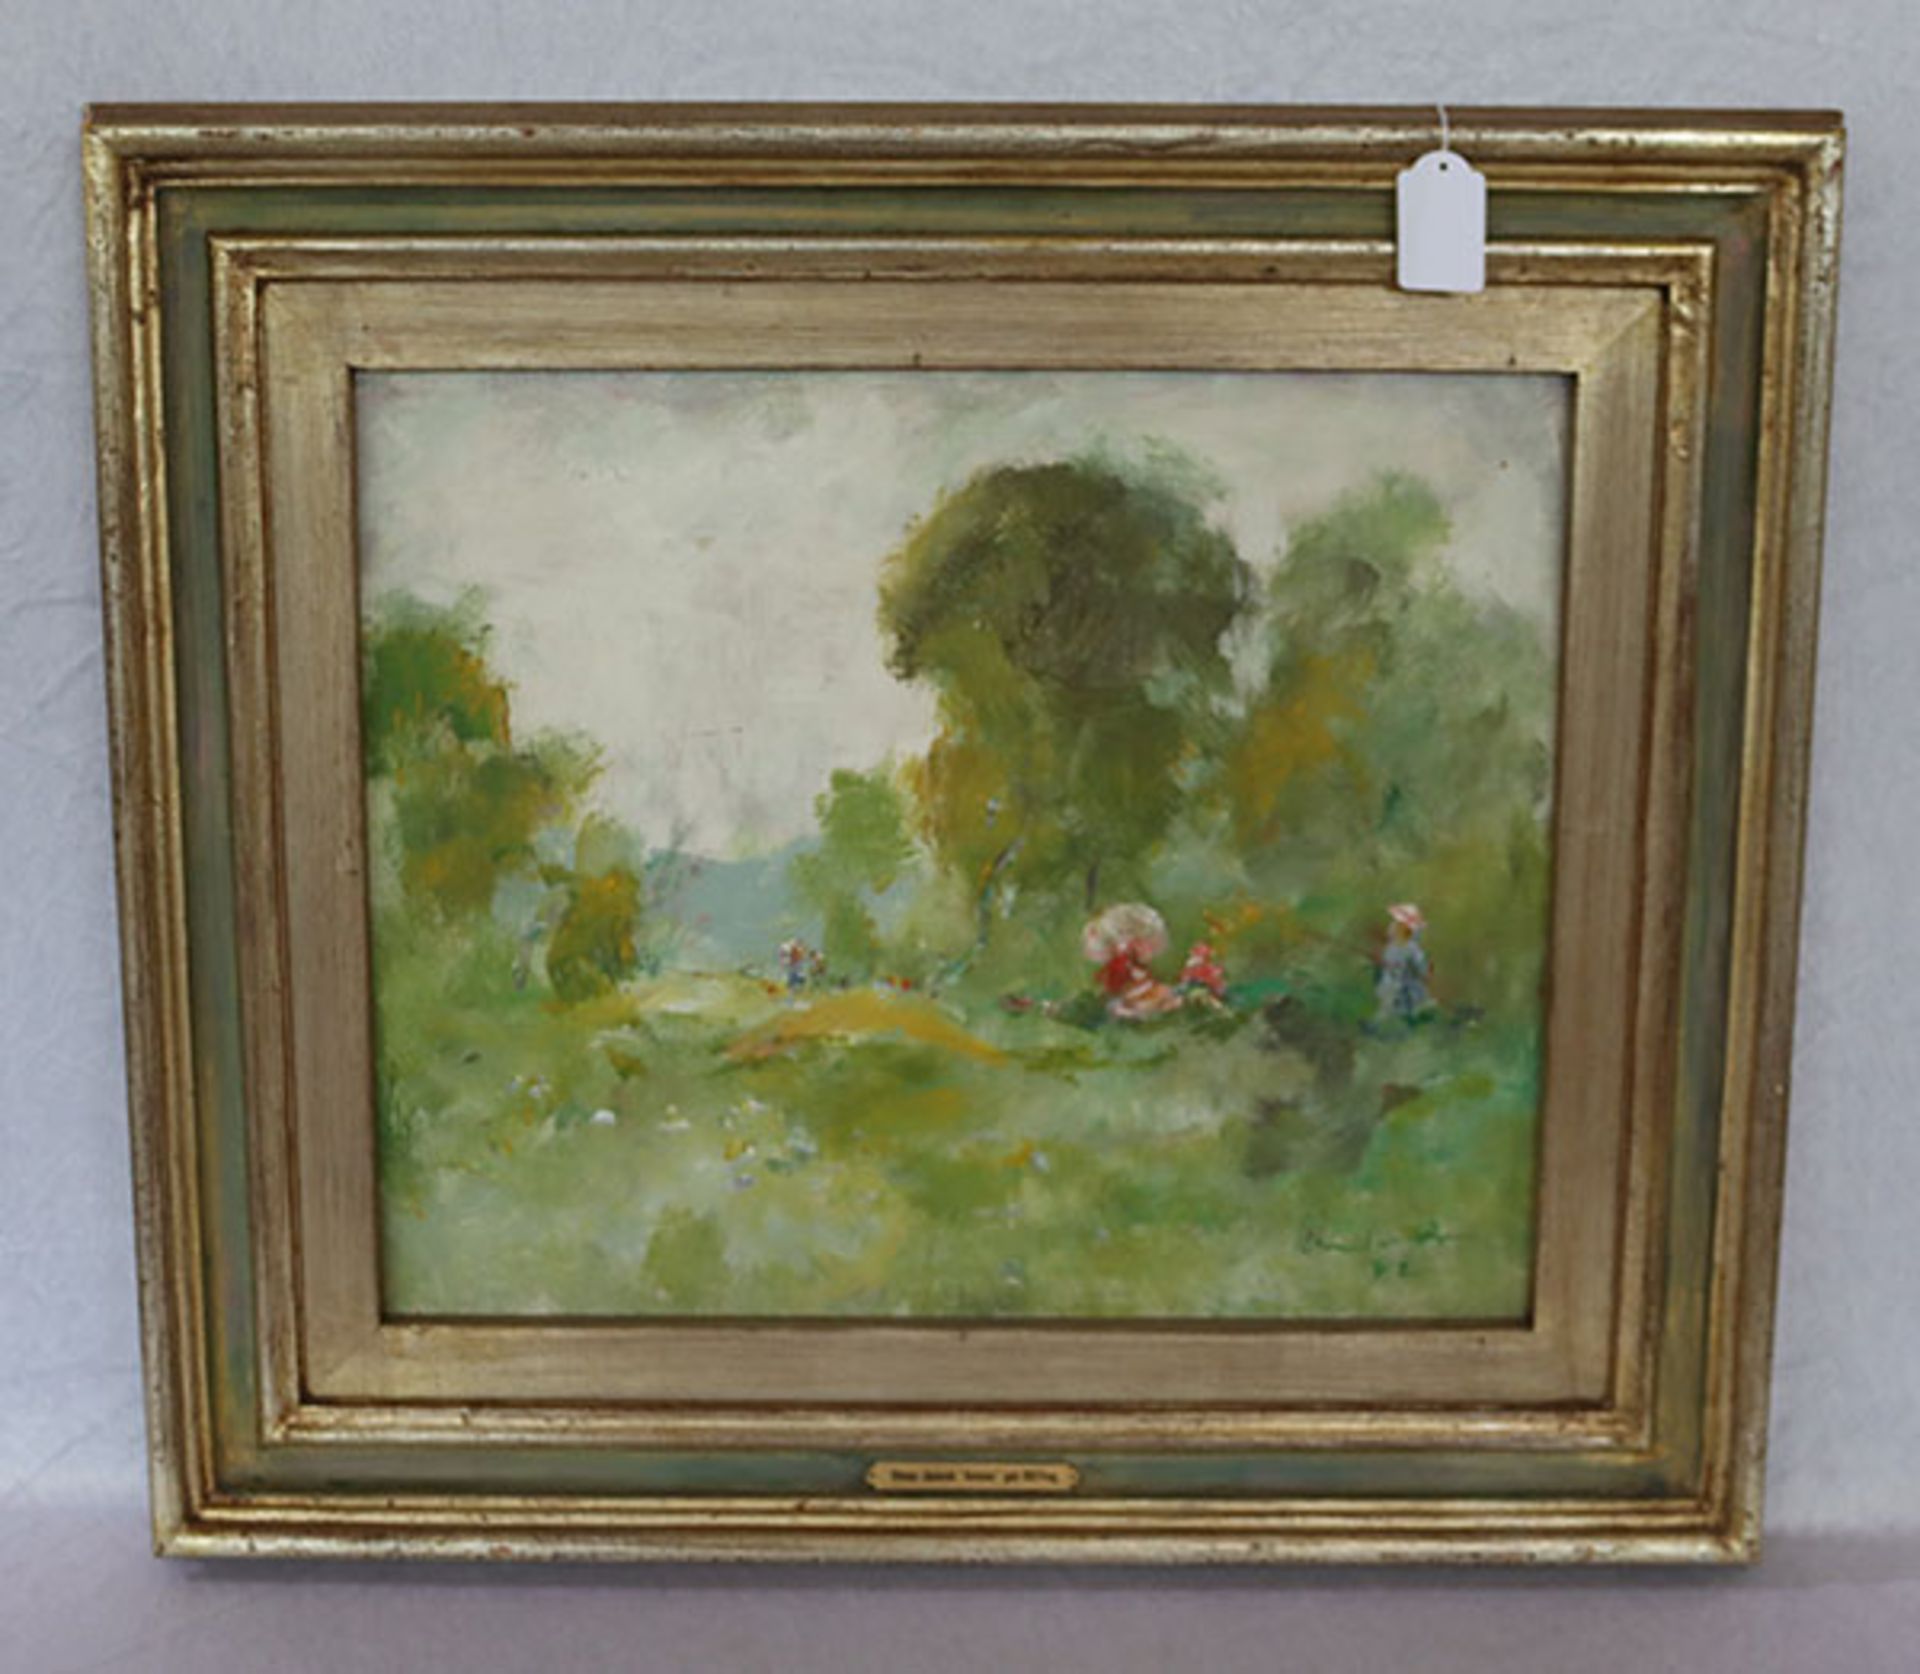 Otmar Janecek 'Antonio' Gemälde ÖL/Holz 'Landschafts-Szenerie', signiert und datiert 42, * 1913